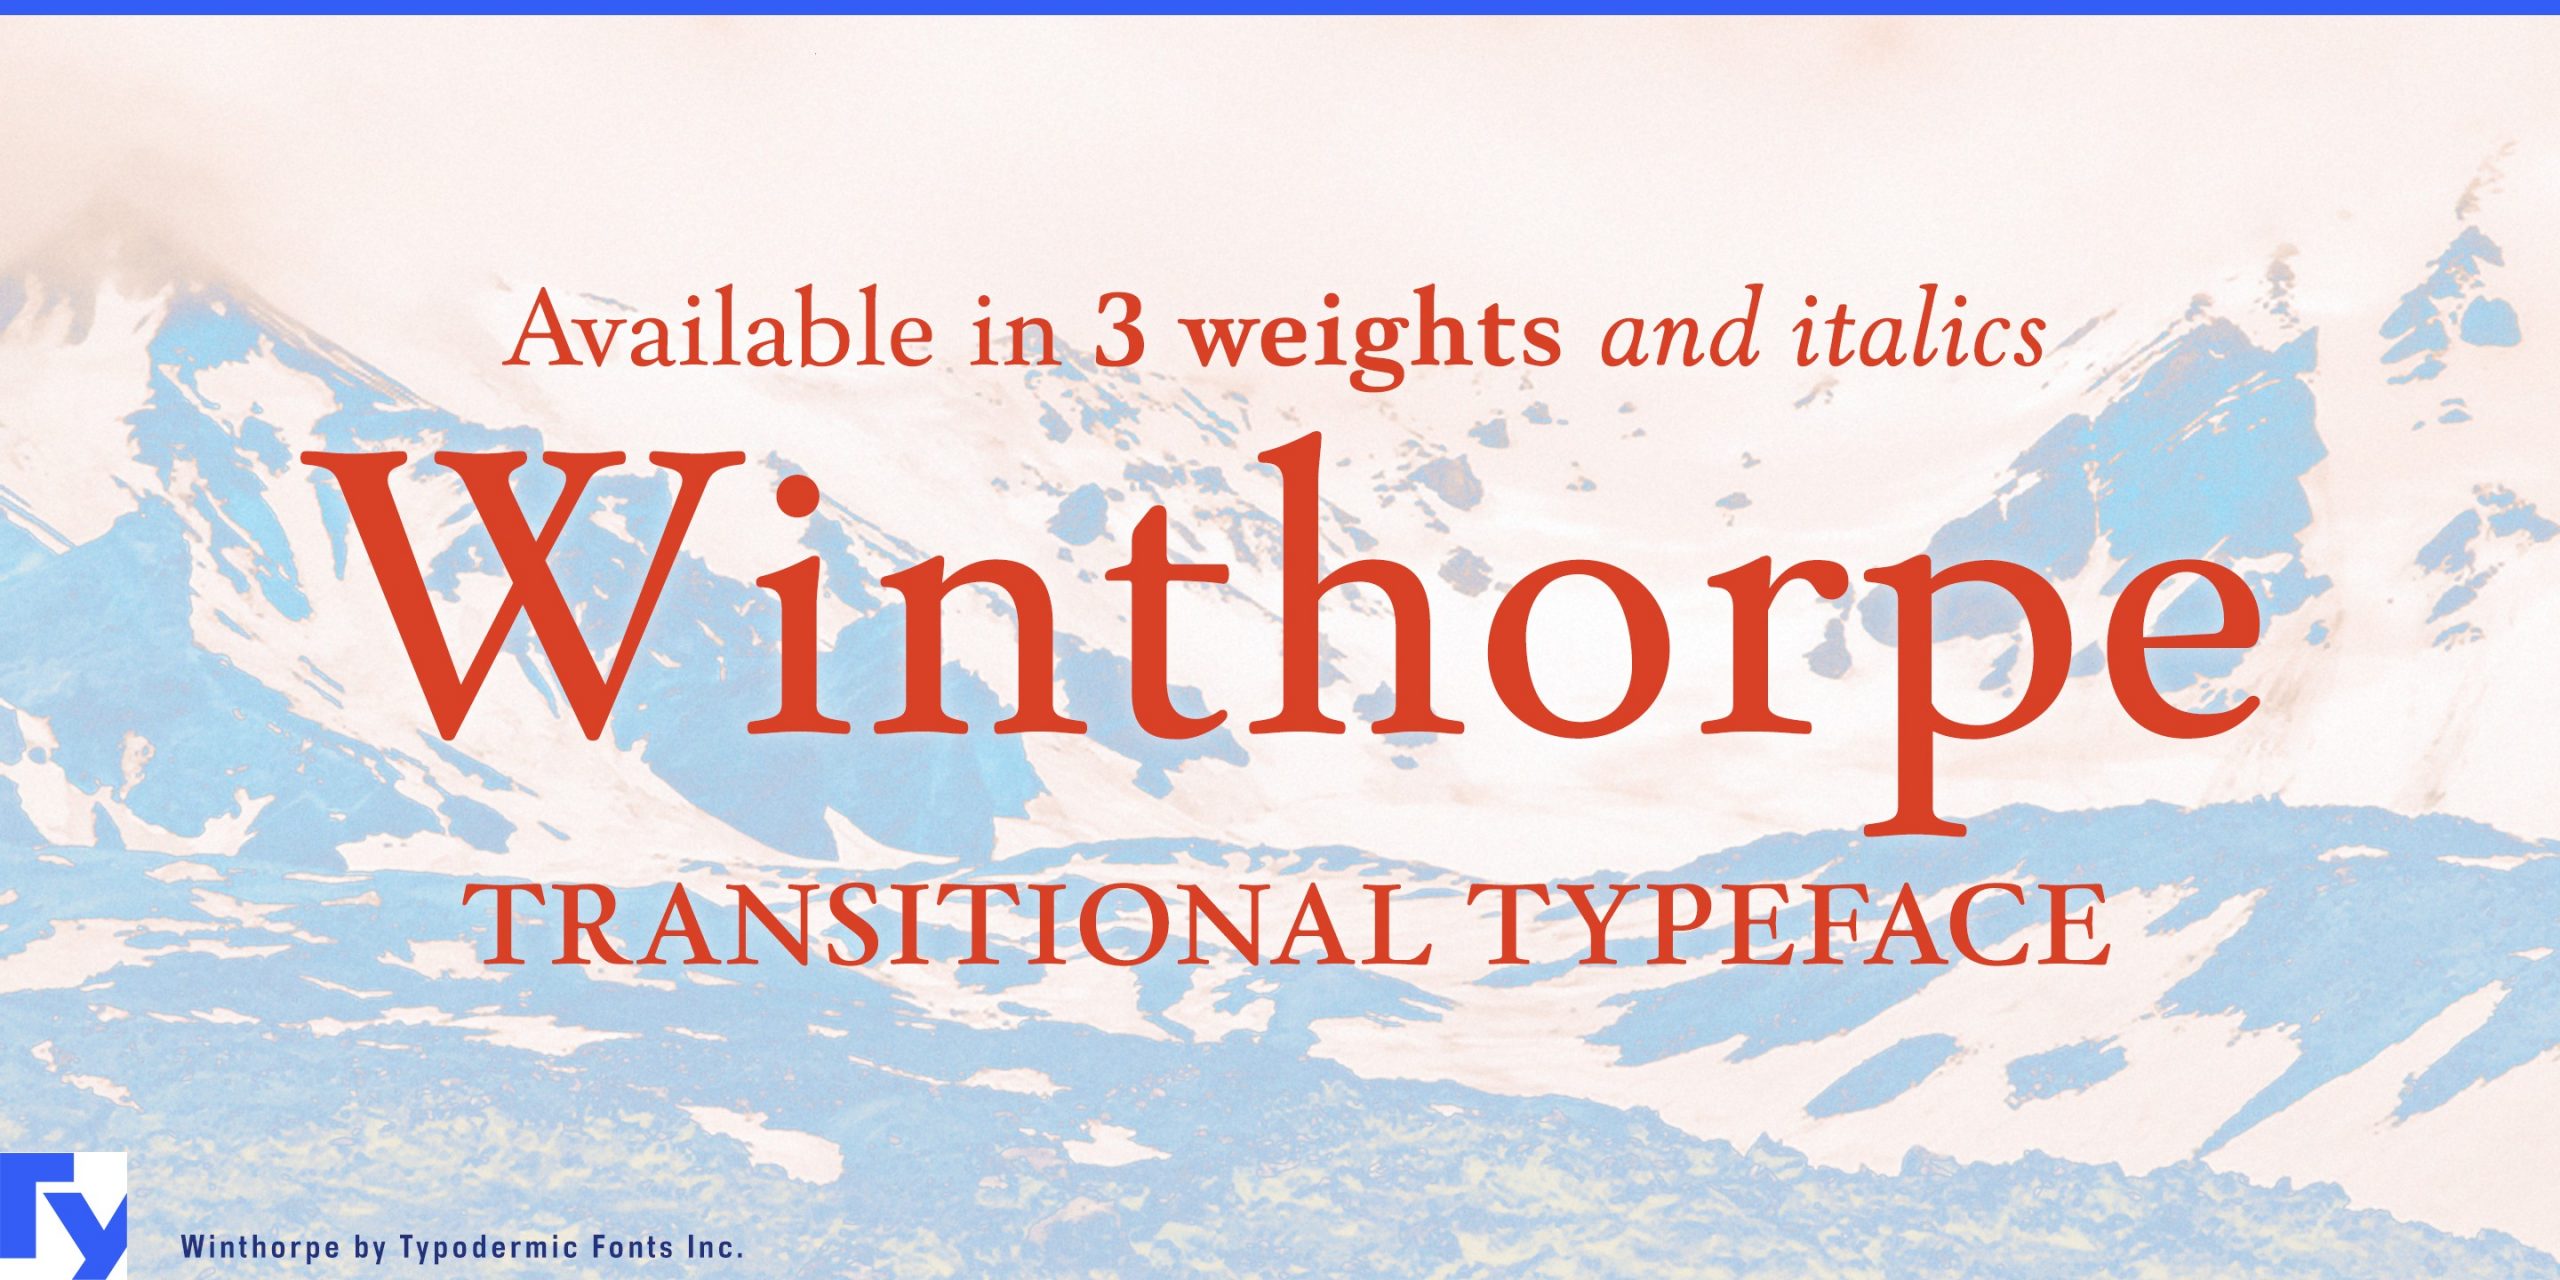 Versatile Options: Unleash the Power of Winthorpe Typeface